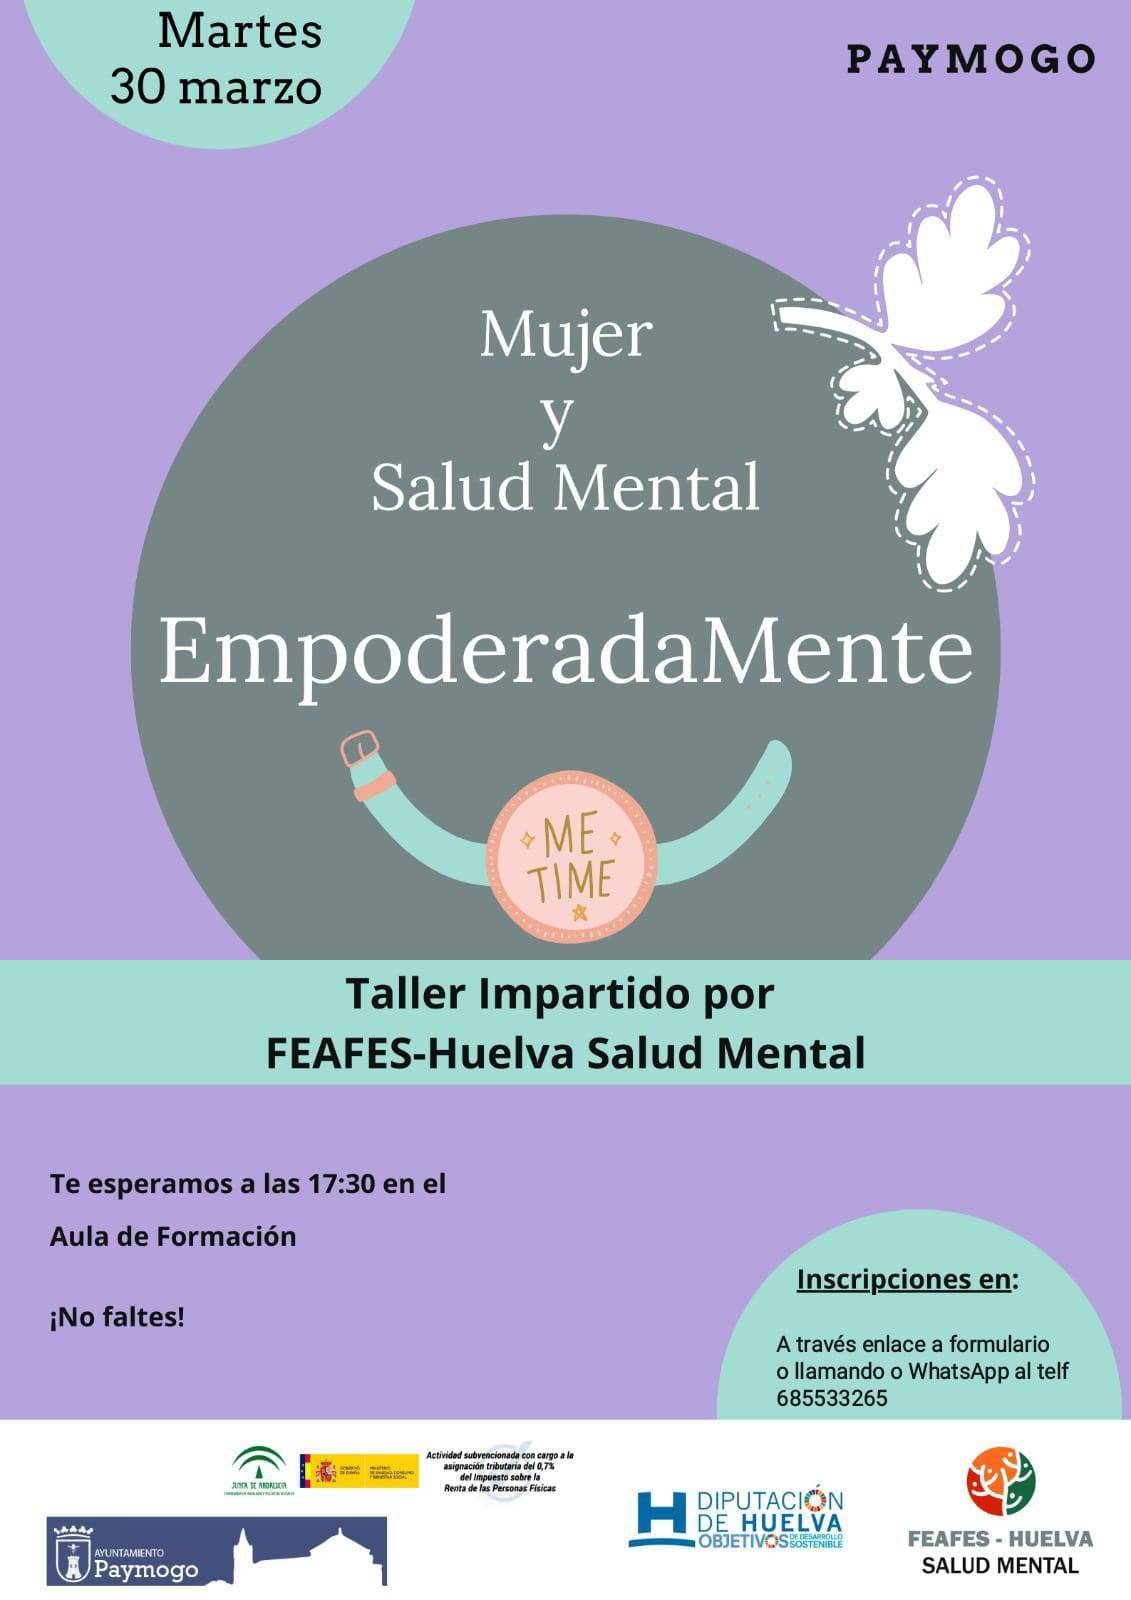 Taller de mujer y salud mental (2021) - Paymogo (Huelva)